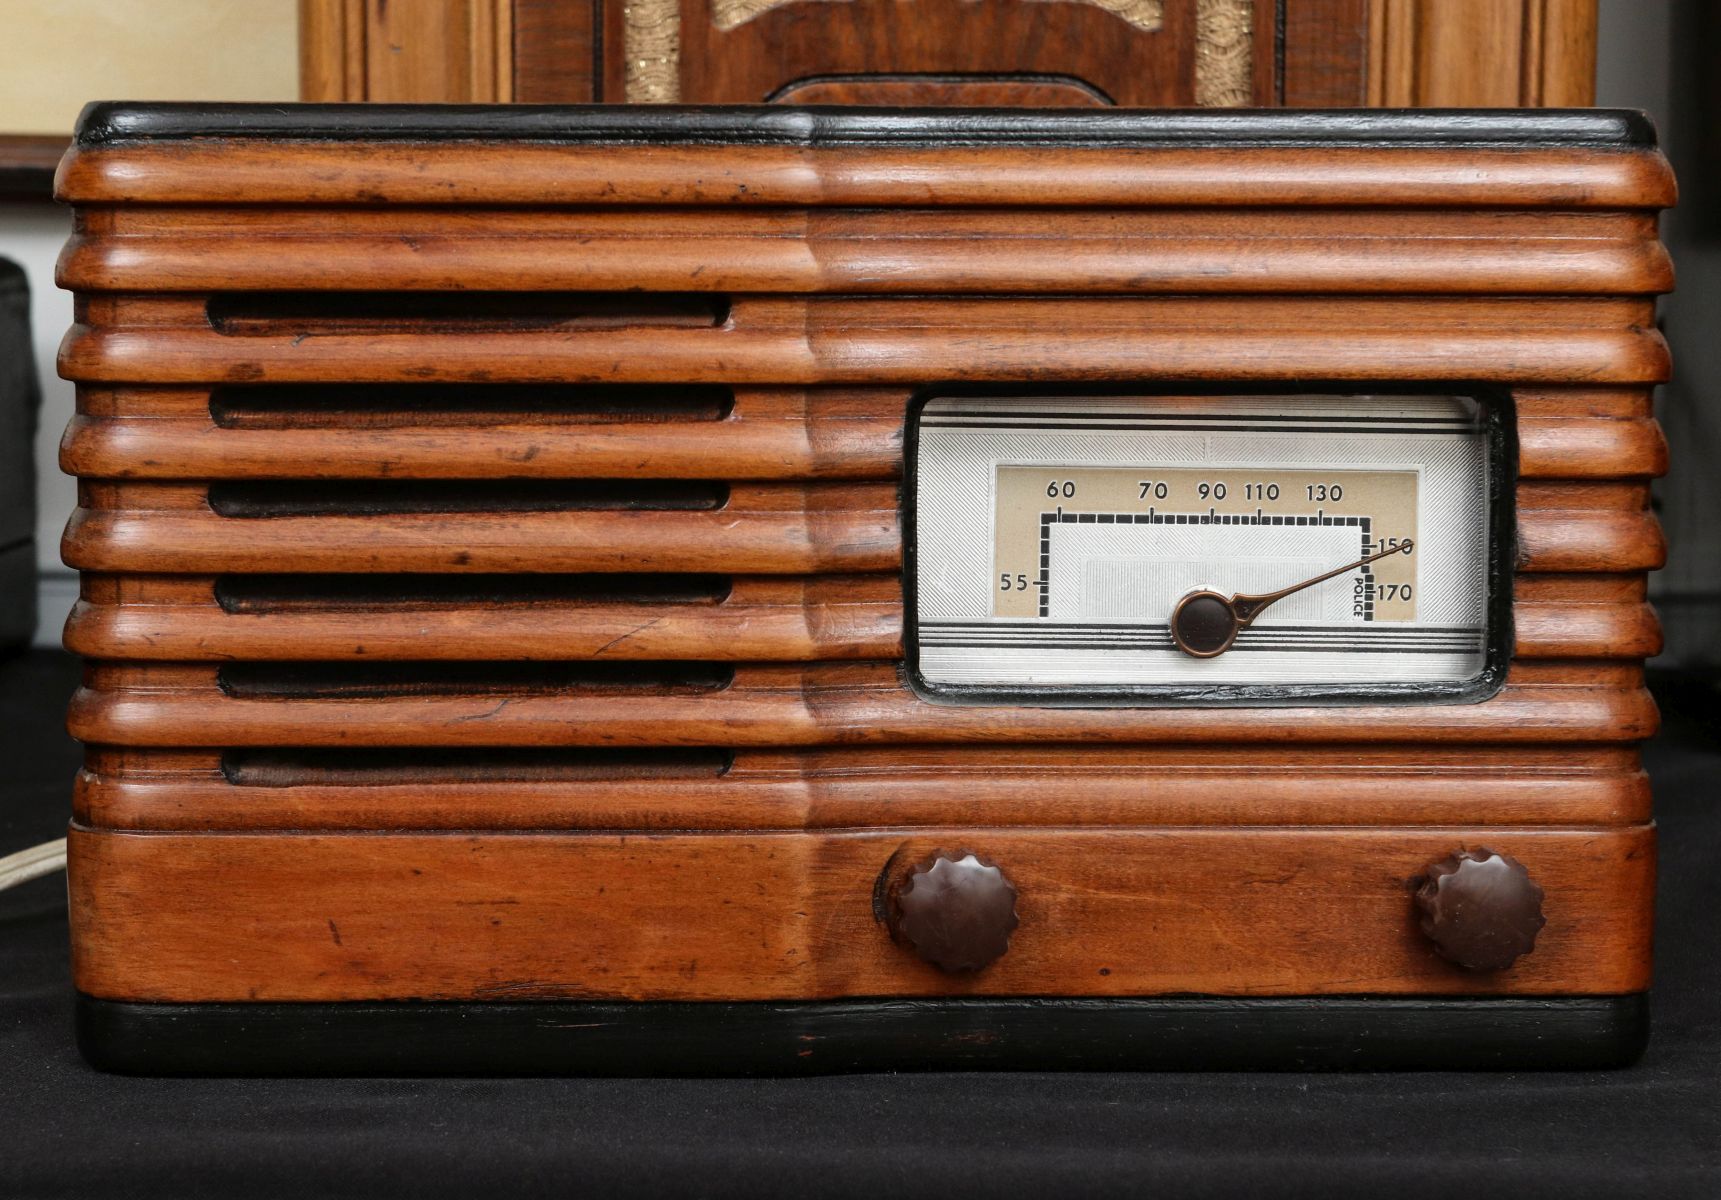 A 1930s AIR KING ART DECO TABLE TOP RADIO